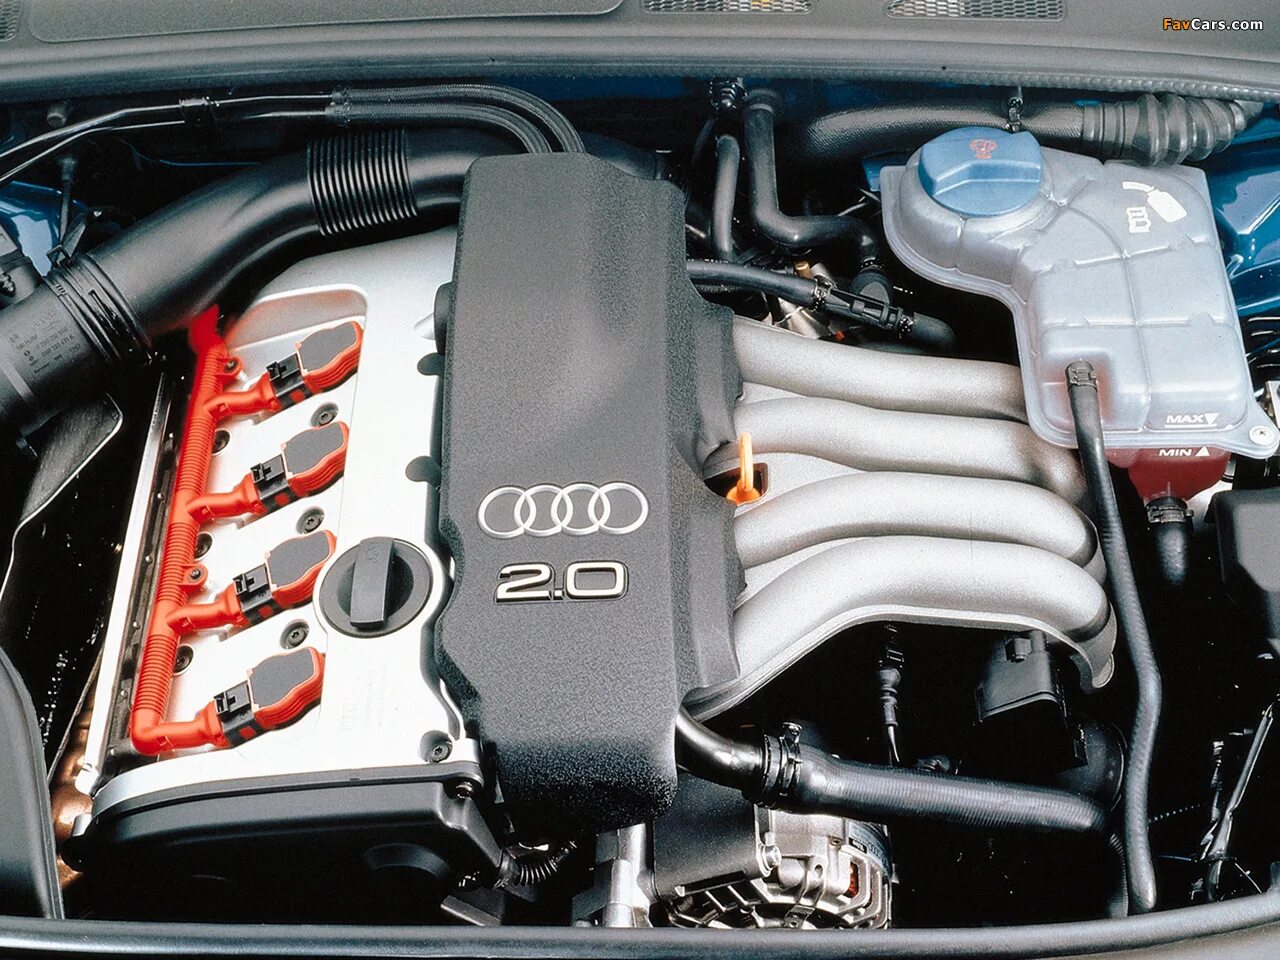 B4 2 b6 200. Audi a4 b6 мотор. Мотор Ауди а4 б6 2.0. Audi a4 2001 2.0 Motor. Двигатель Ауди а4.